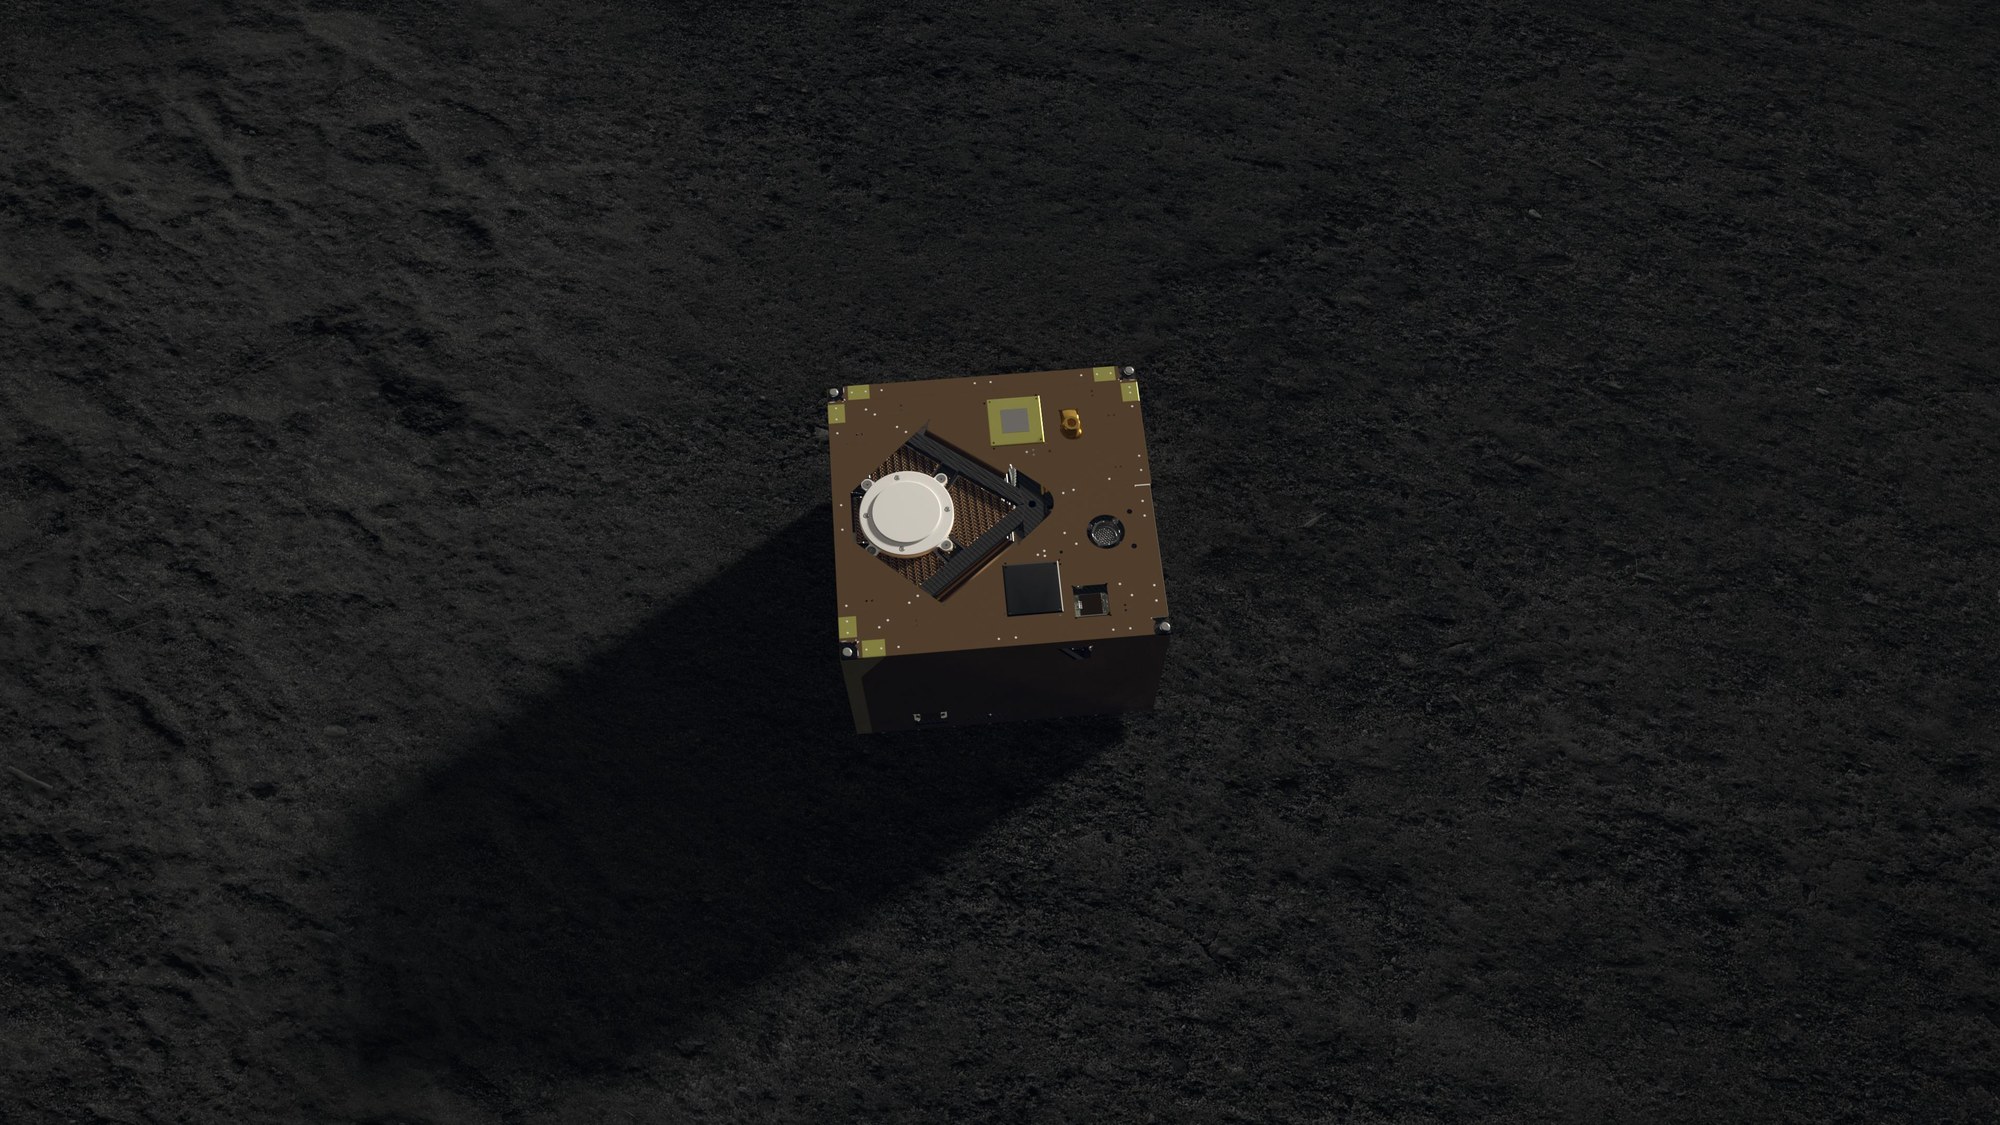 Asteroid lander MASCOT